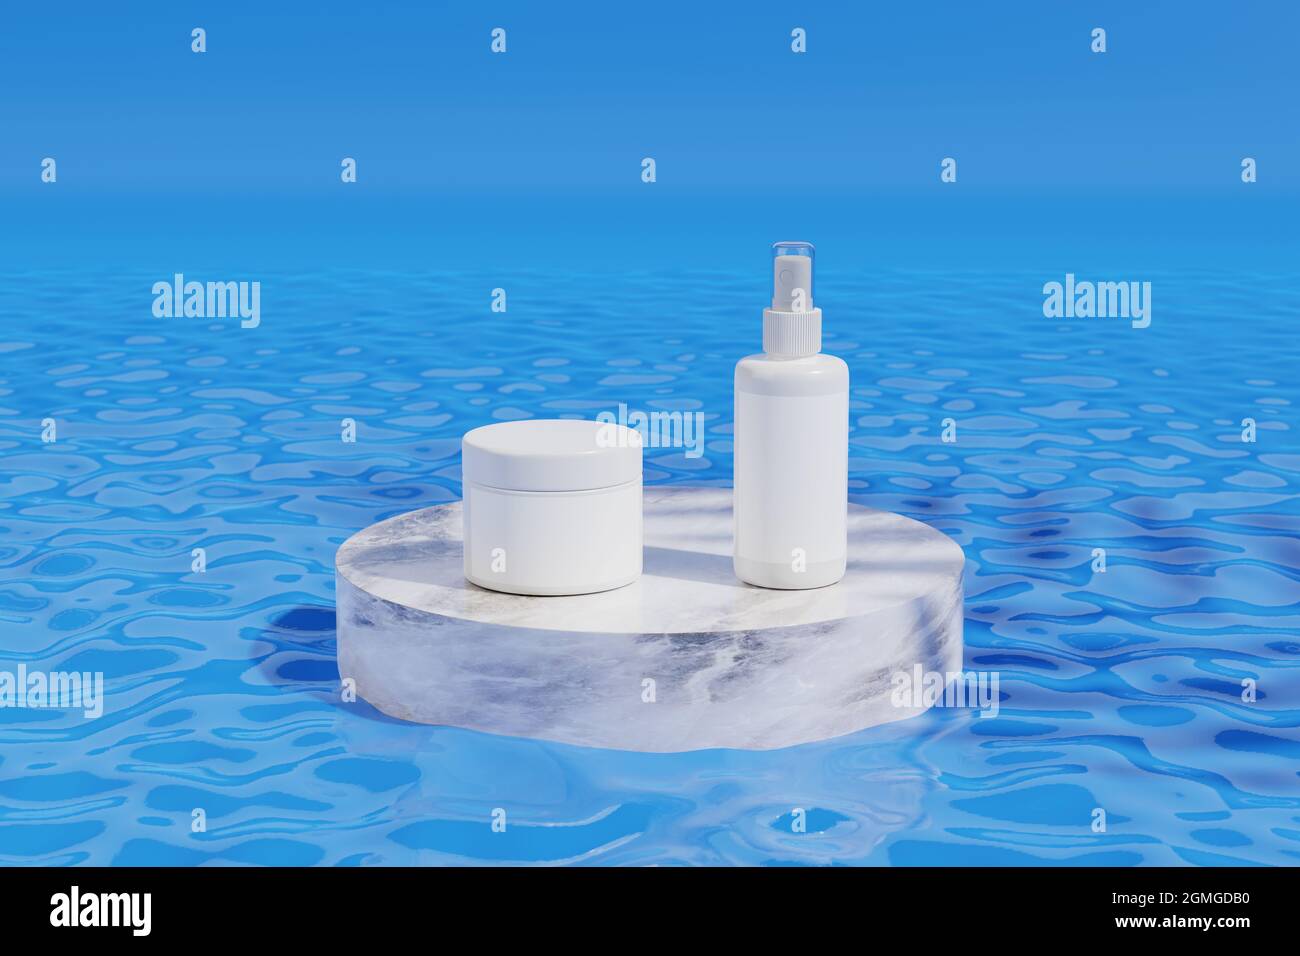 Set of cosmetics on marble podium on water. 3d illustration. Stock Photo